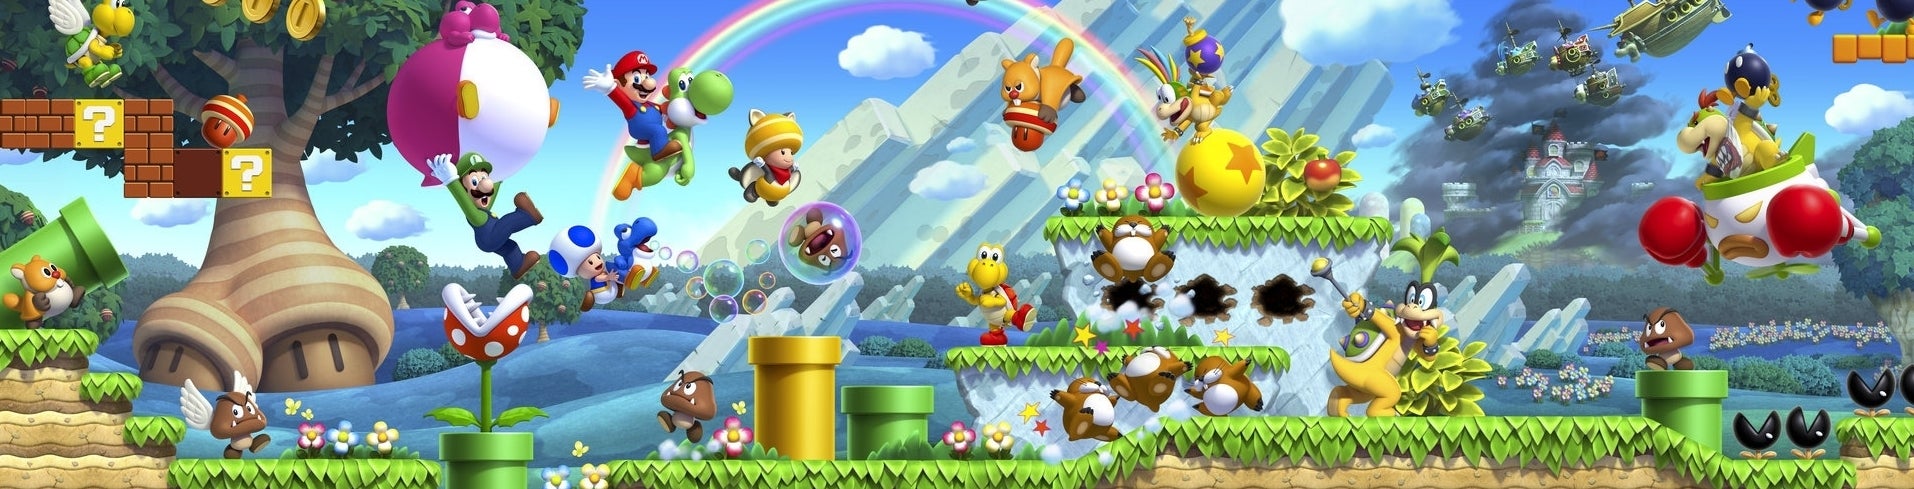 Image for New Super Mario Bros. U - a whole new world?